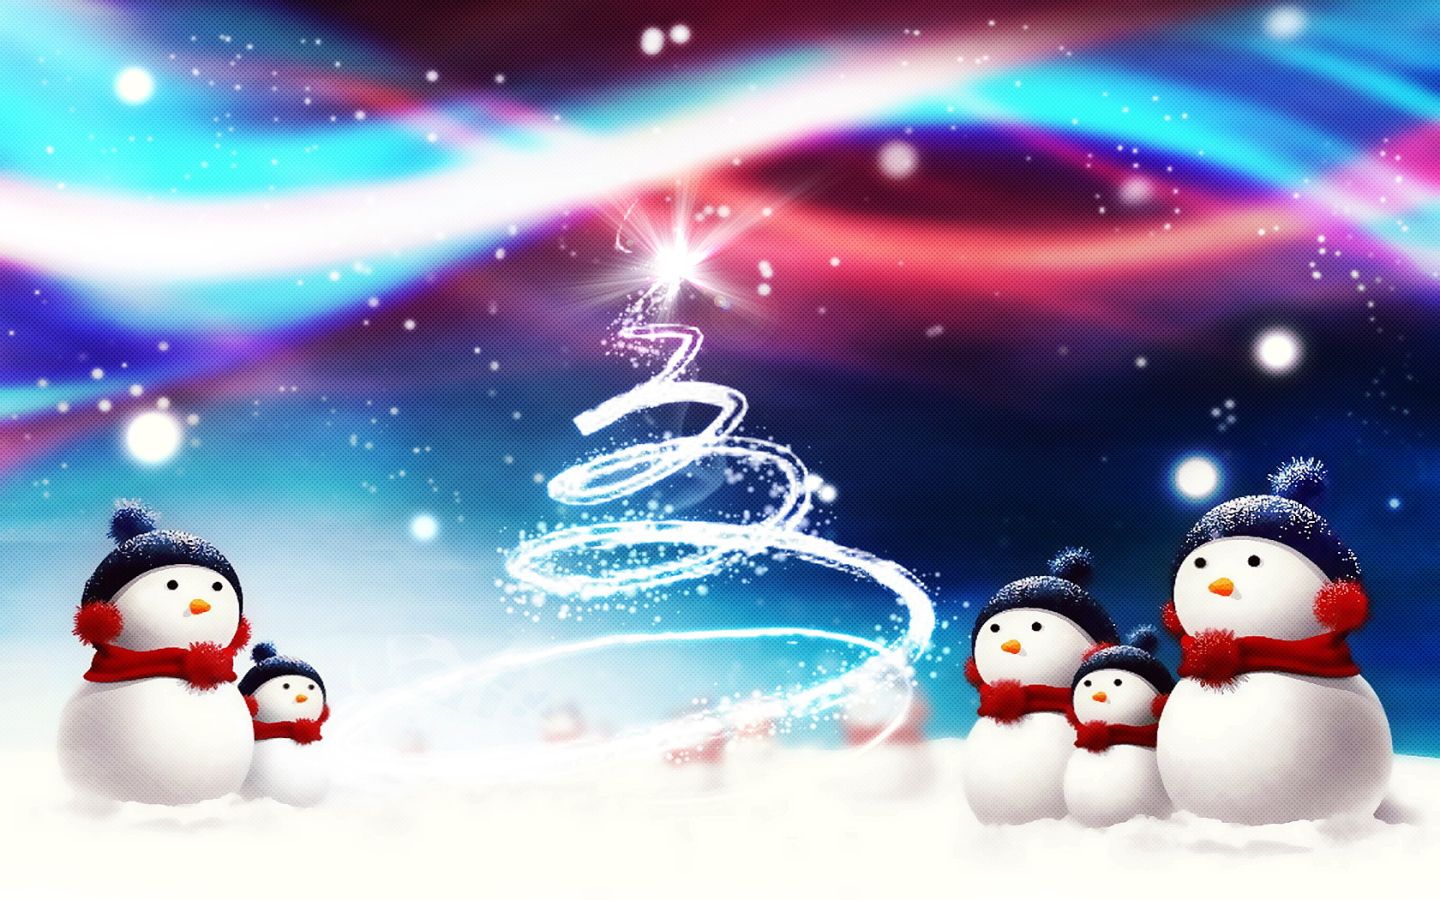 Snowmen on Christmas, colorful picture Desktop wallpaper 1440x900